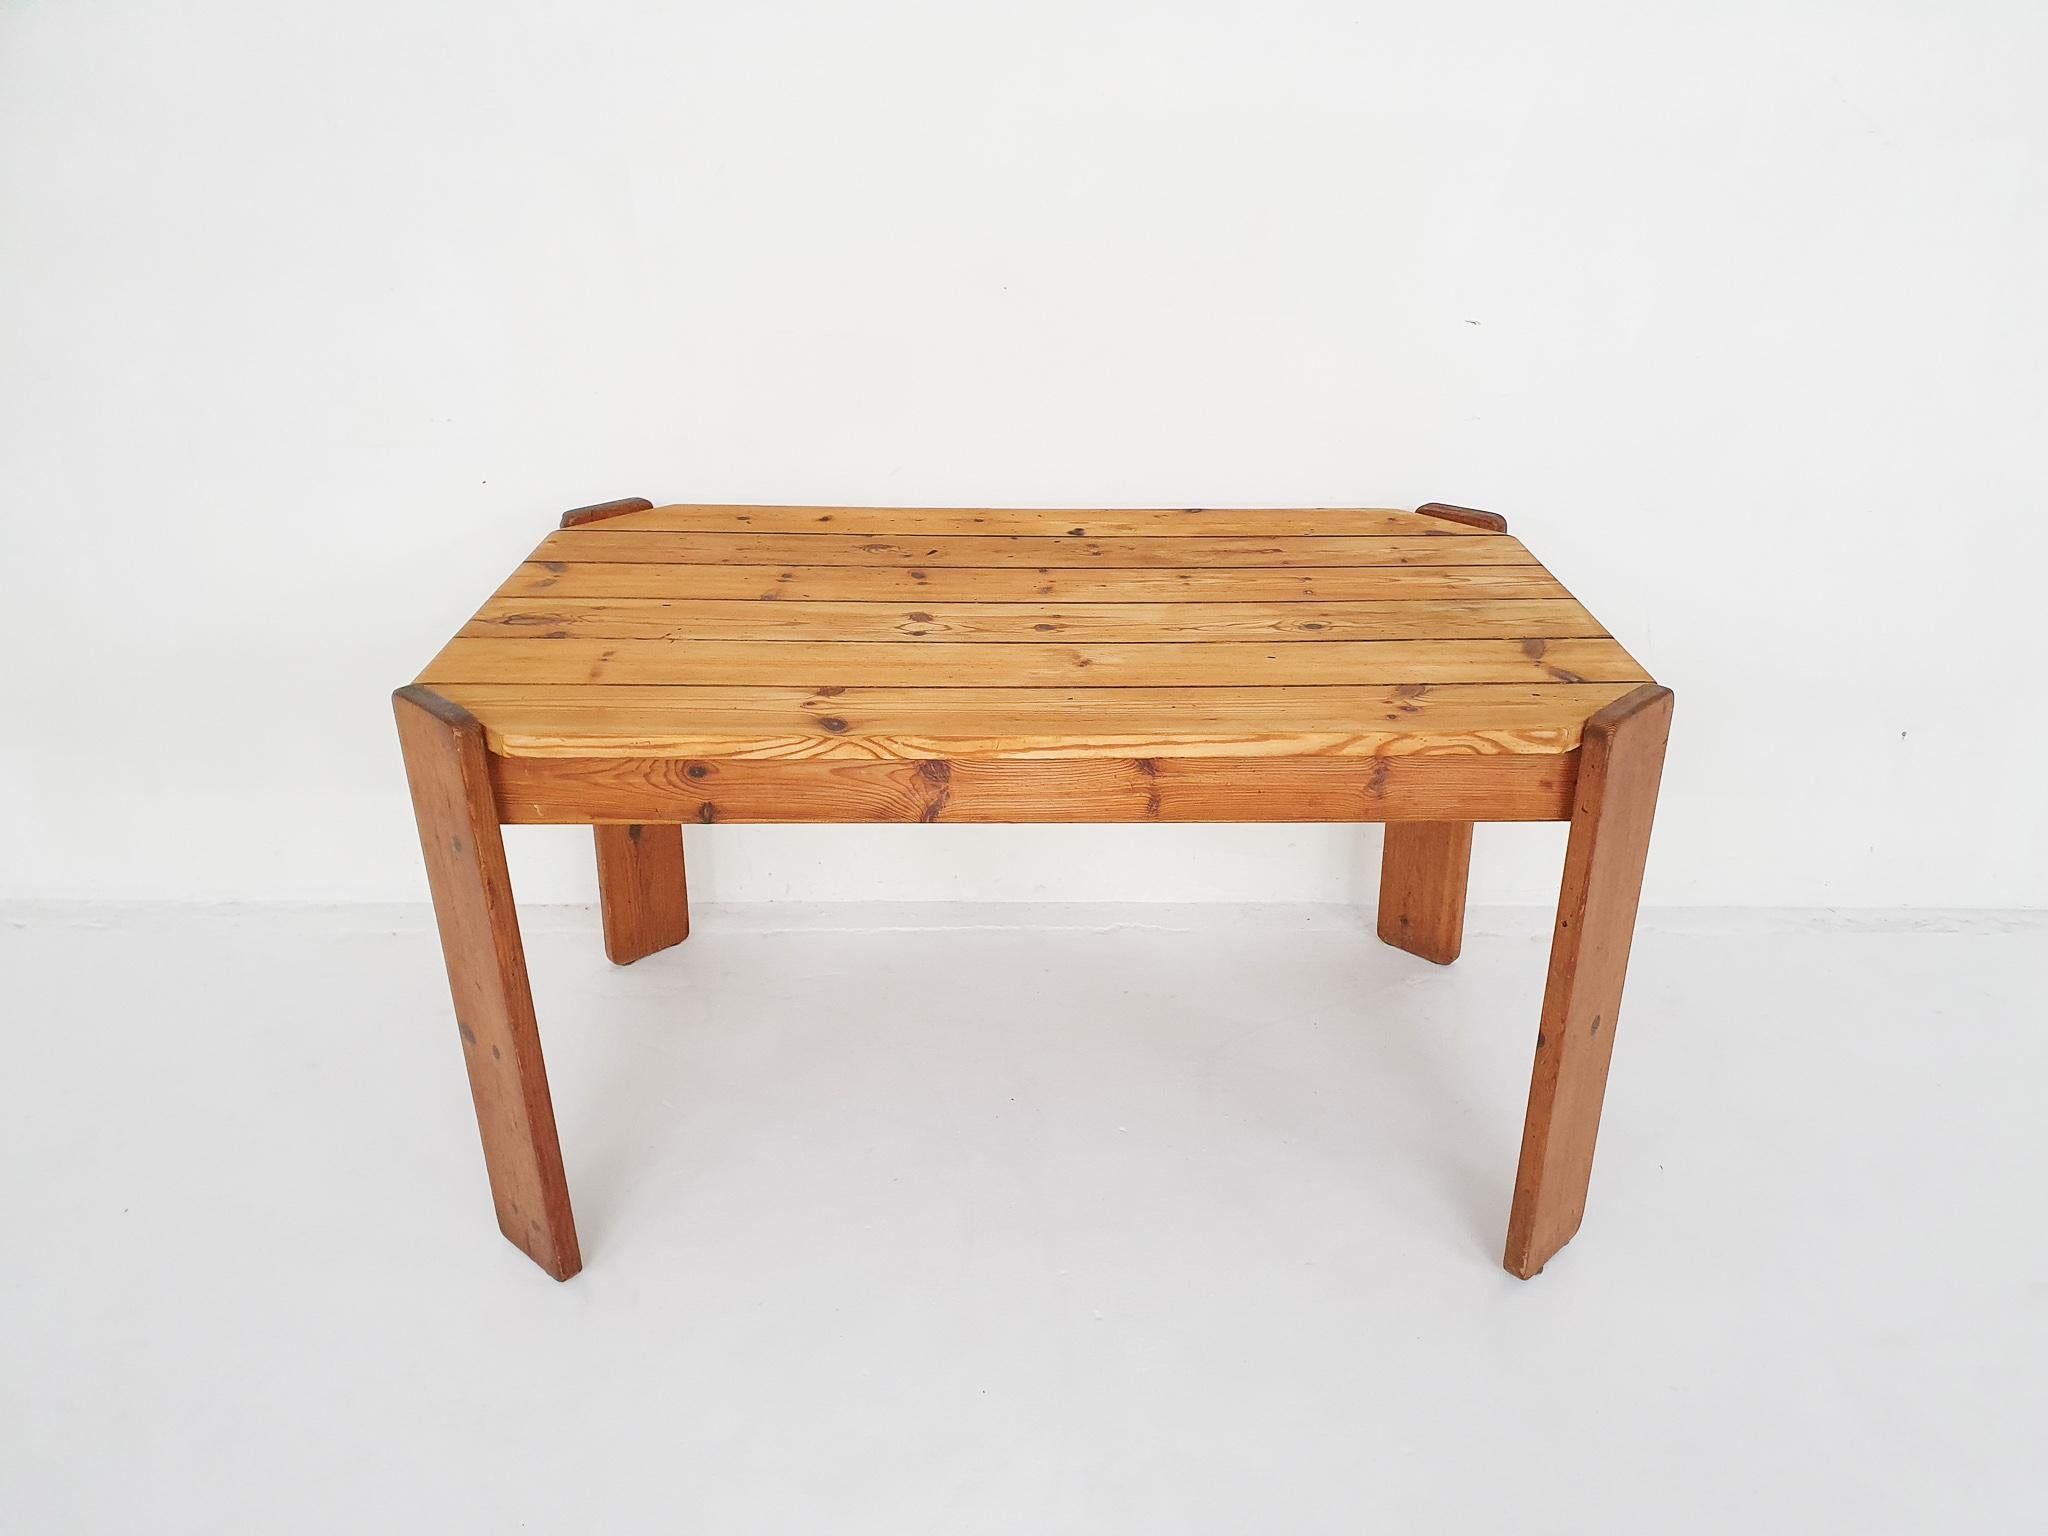 Scandinavian Modern Pinewood dining table attrb. to Ate van Apeldoorn, The Netherlands 1970's For Sale